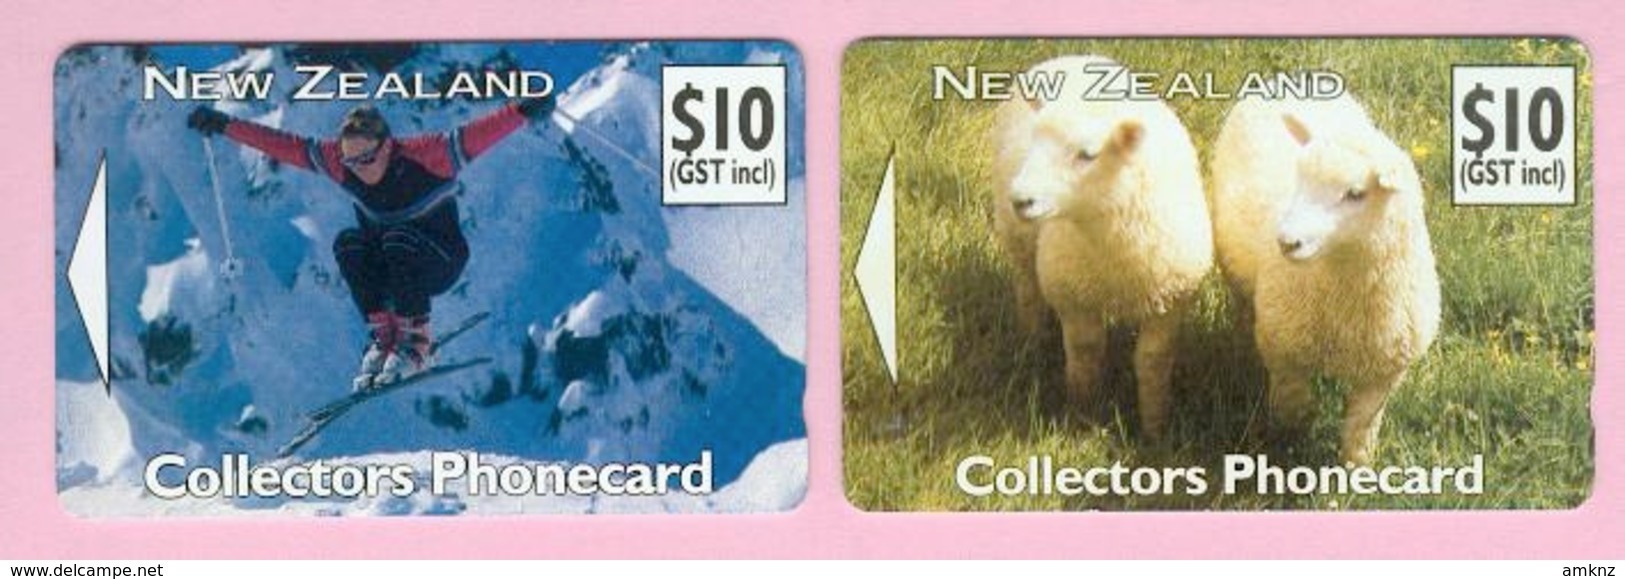 New Zealand - Private Overprint - 1992 Collectors Phonecard Set (2) - VFU - NZ-CO-09 - Neuseeland